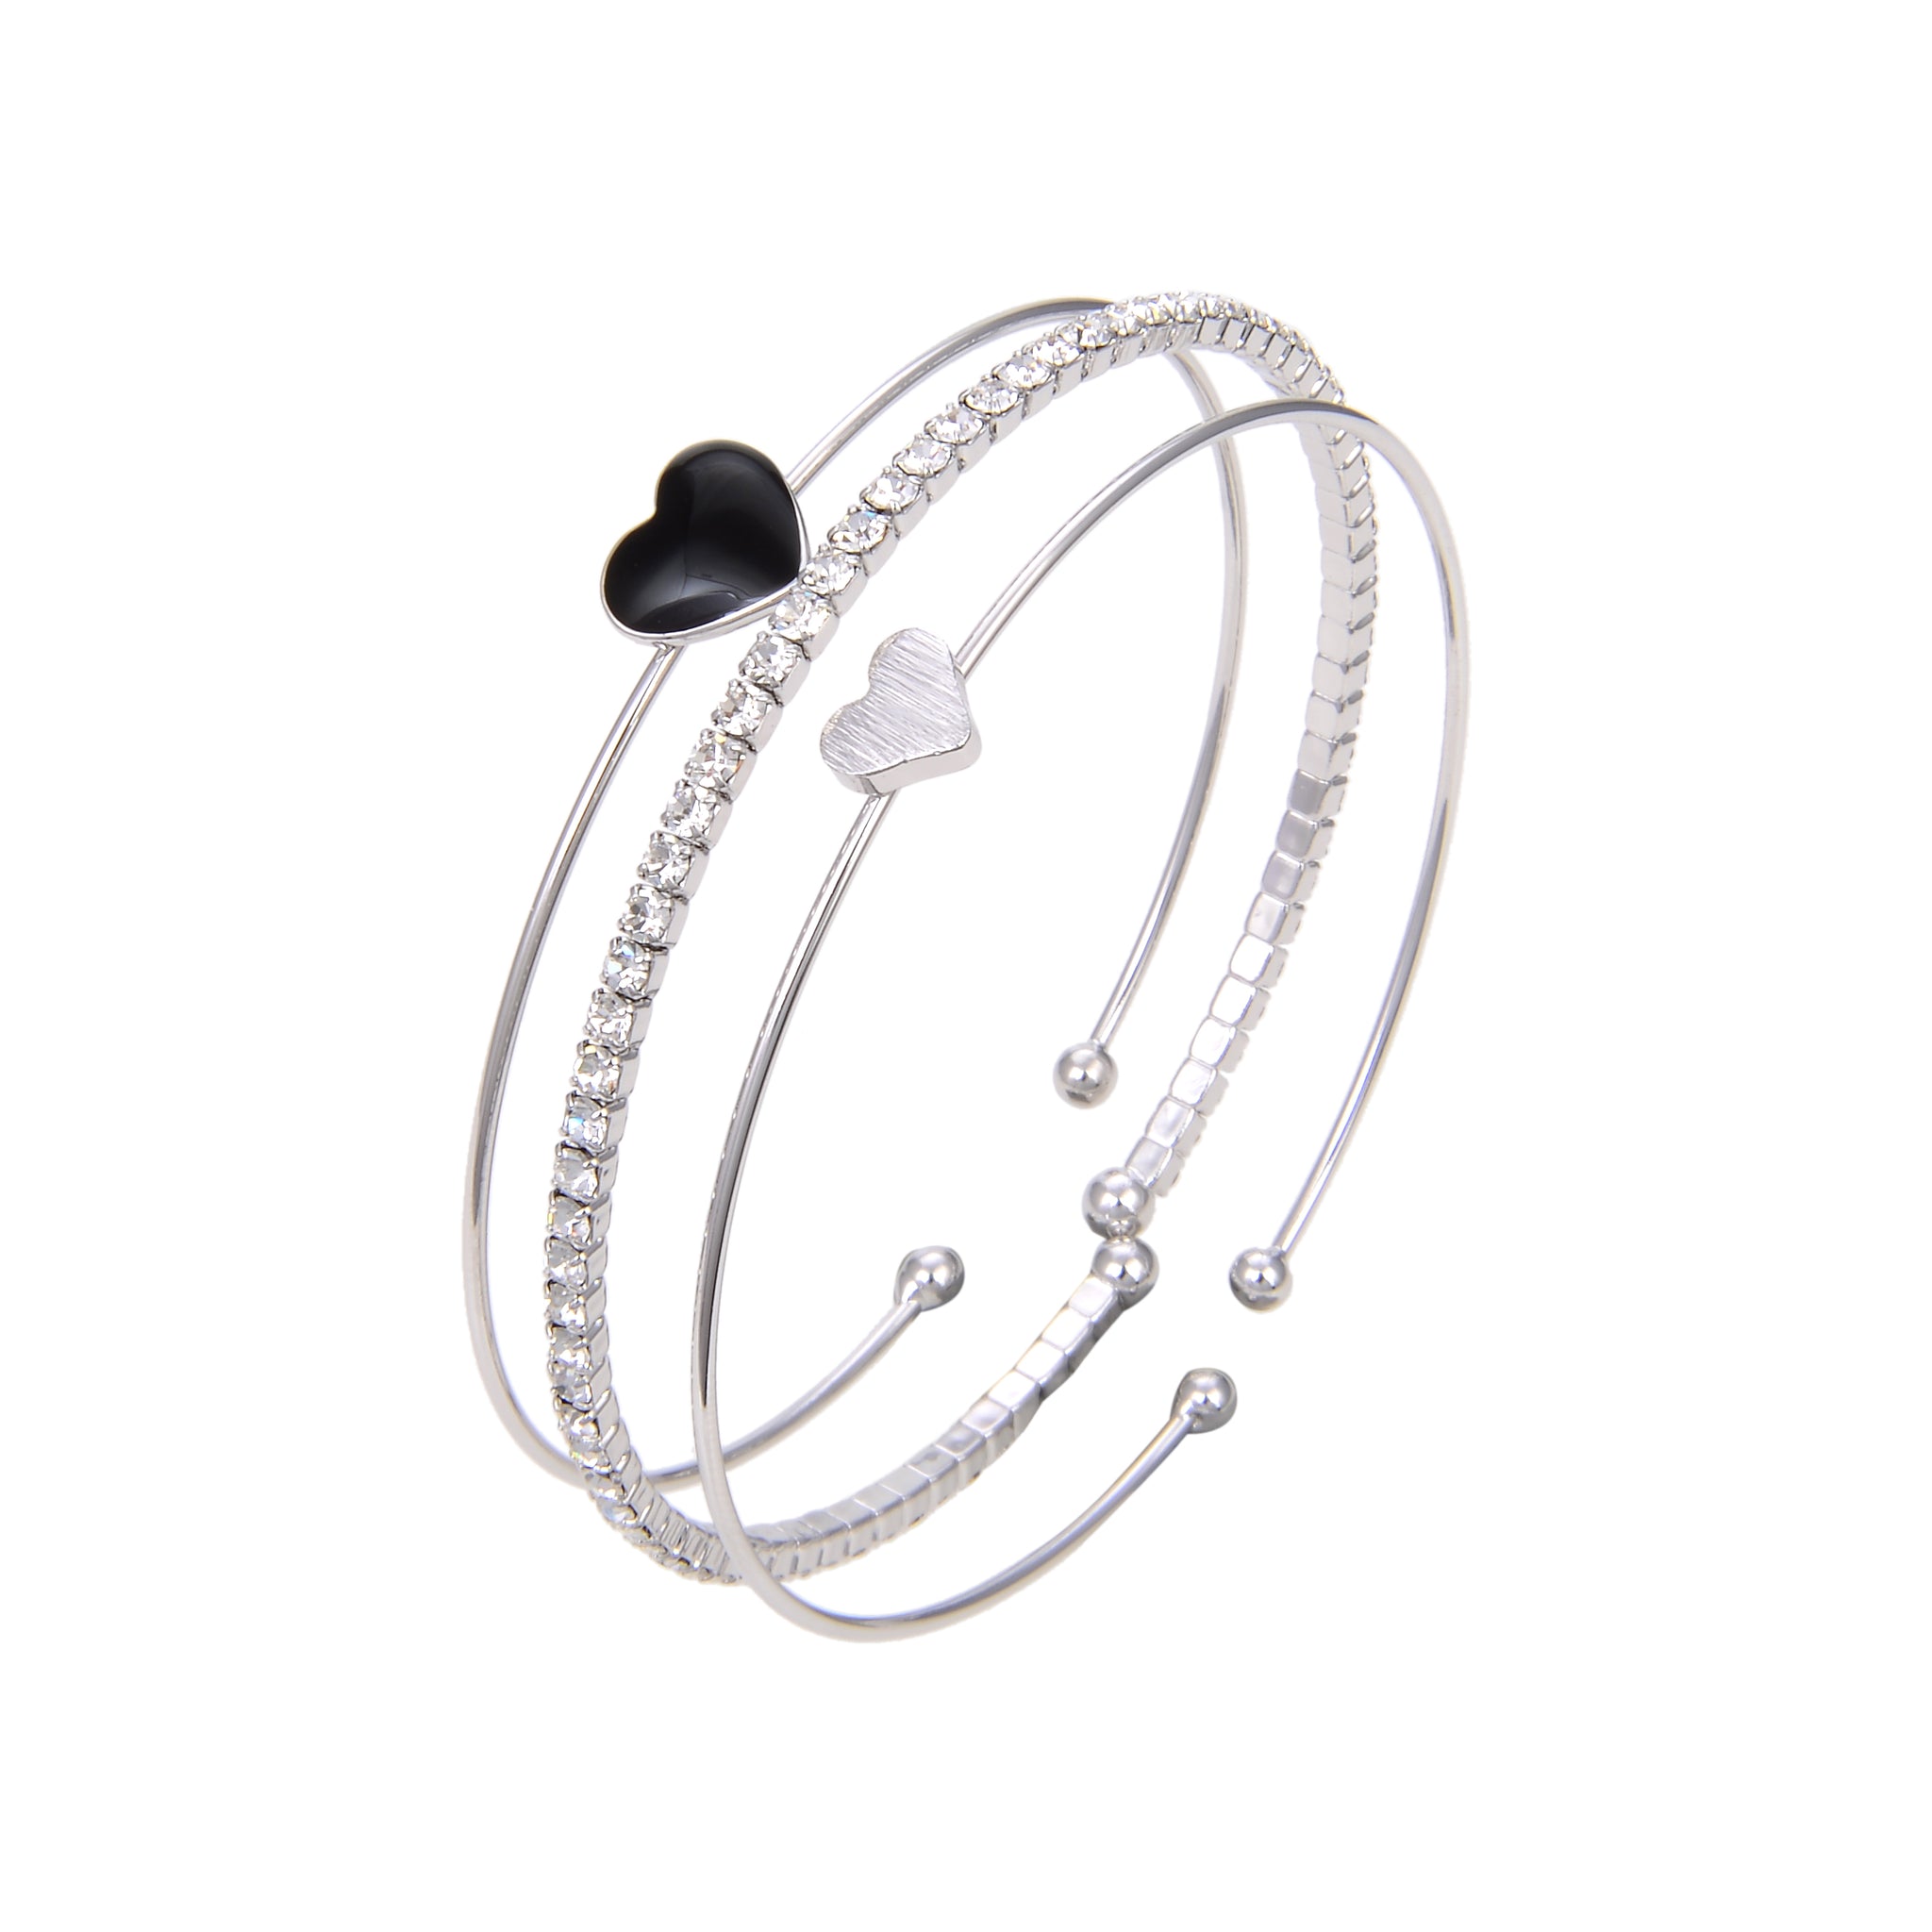 Silver Plated Cubic Zirconia Bangle Bracelet, CZ With Black Onyx Heart Print Bangle Bracelet